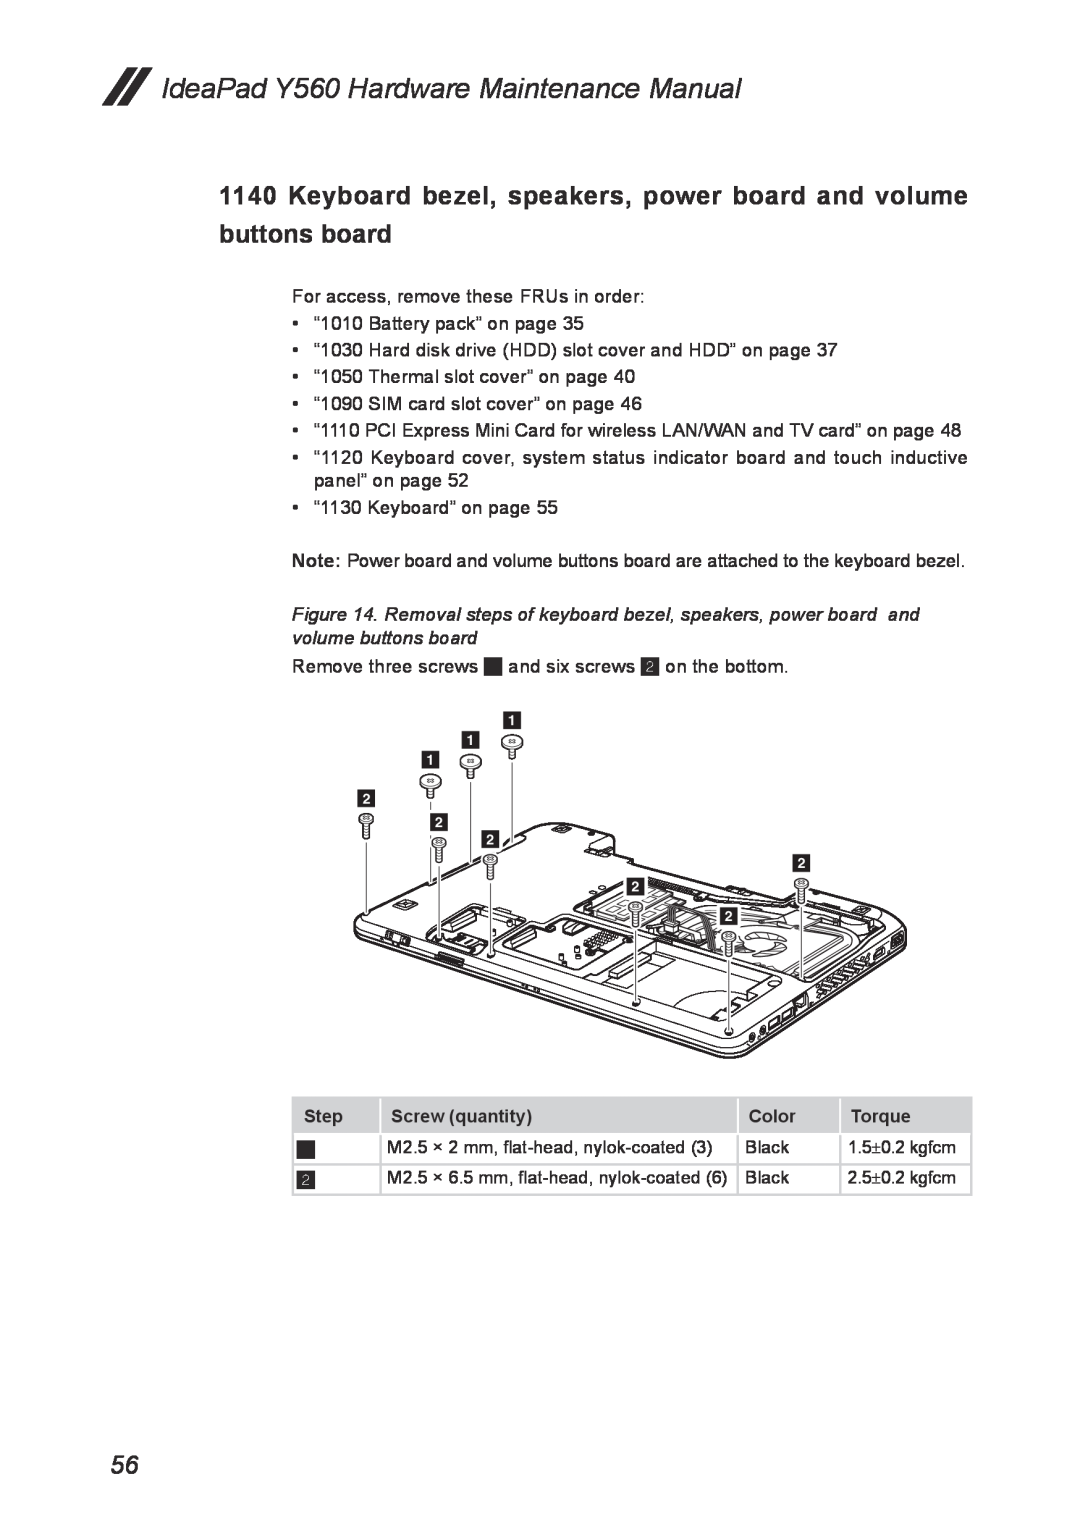 Lenovo manual Keyboard bezel, speakers, power board and volume buttons board, IdeaPad Y560 Hardware Maintenance Manual 